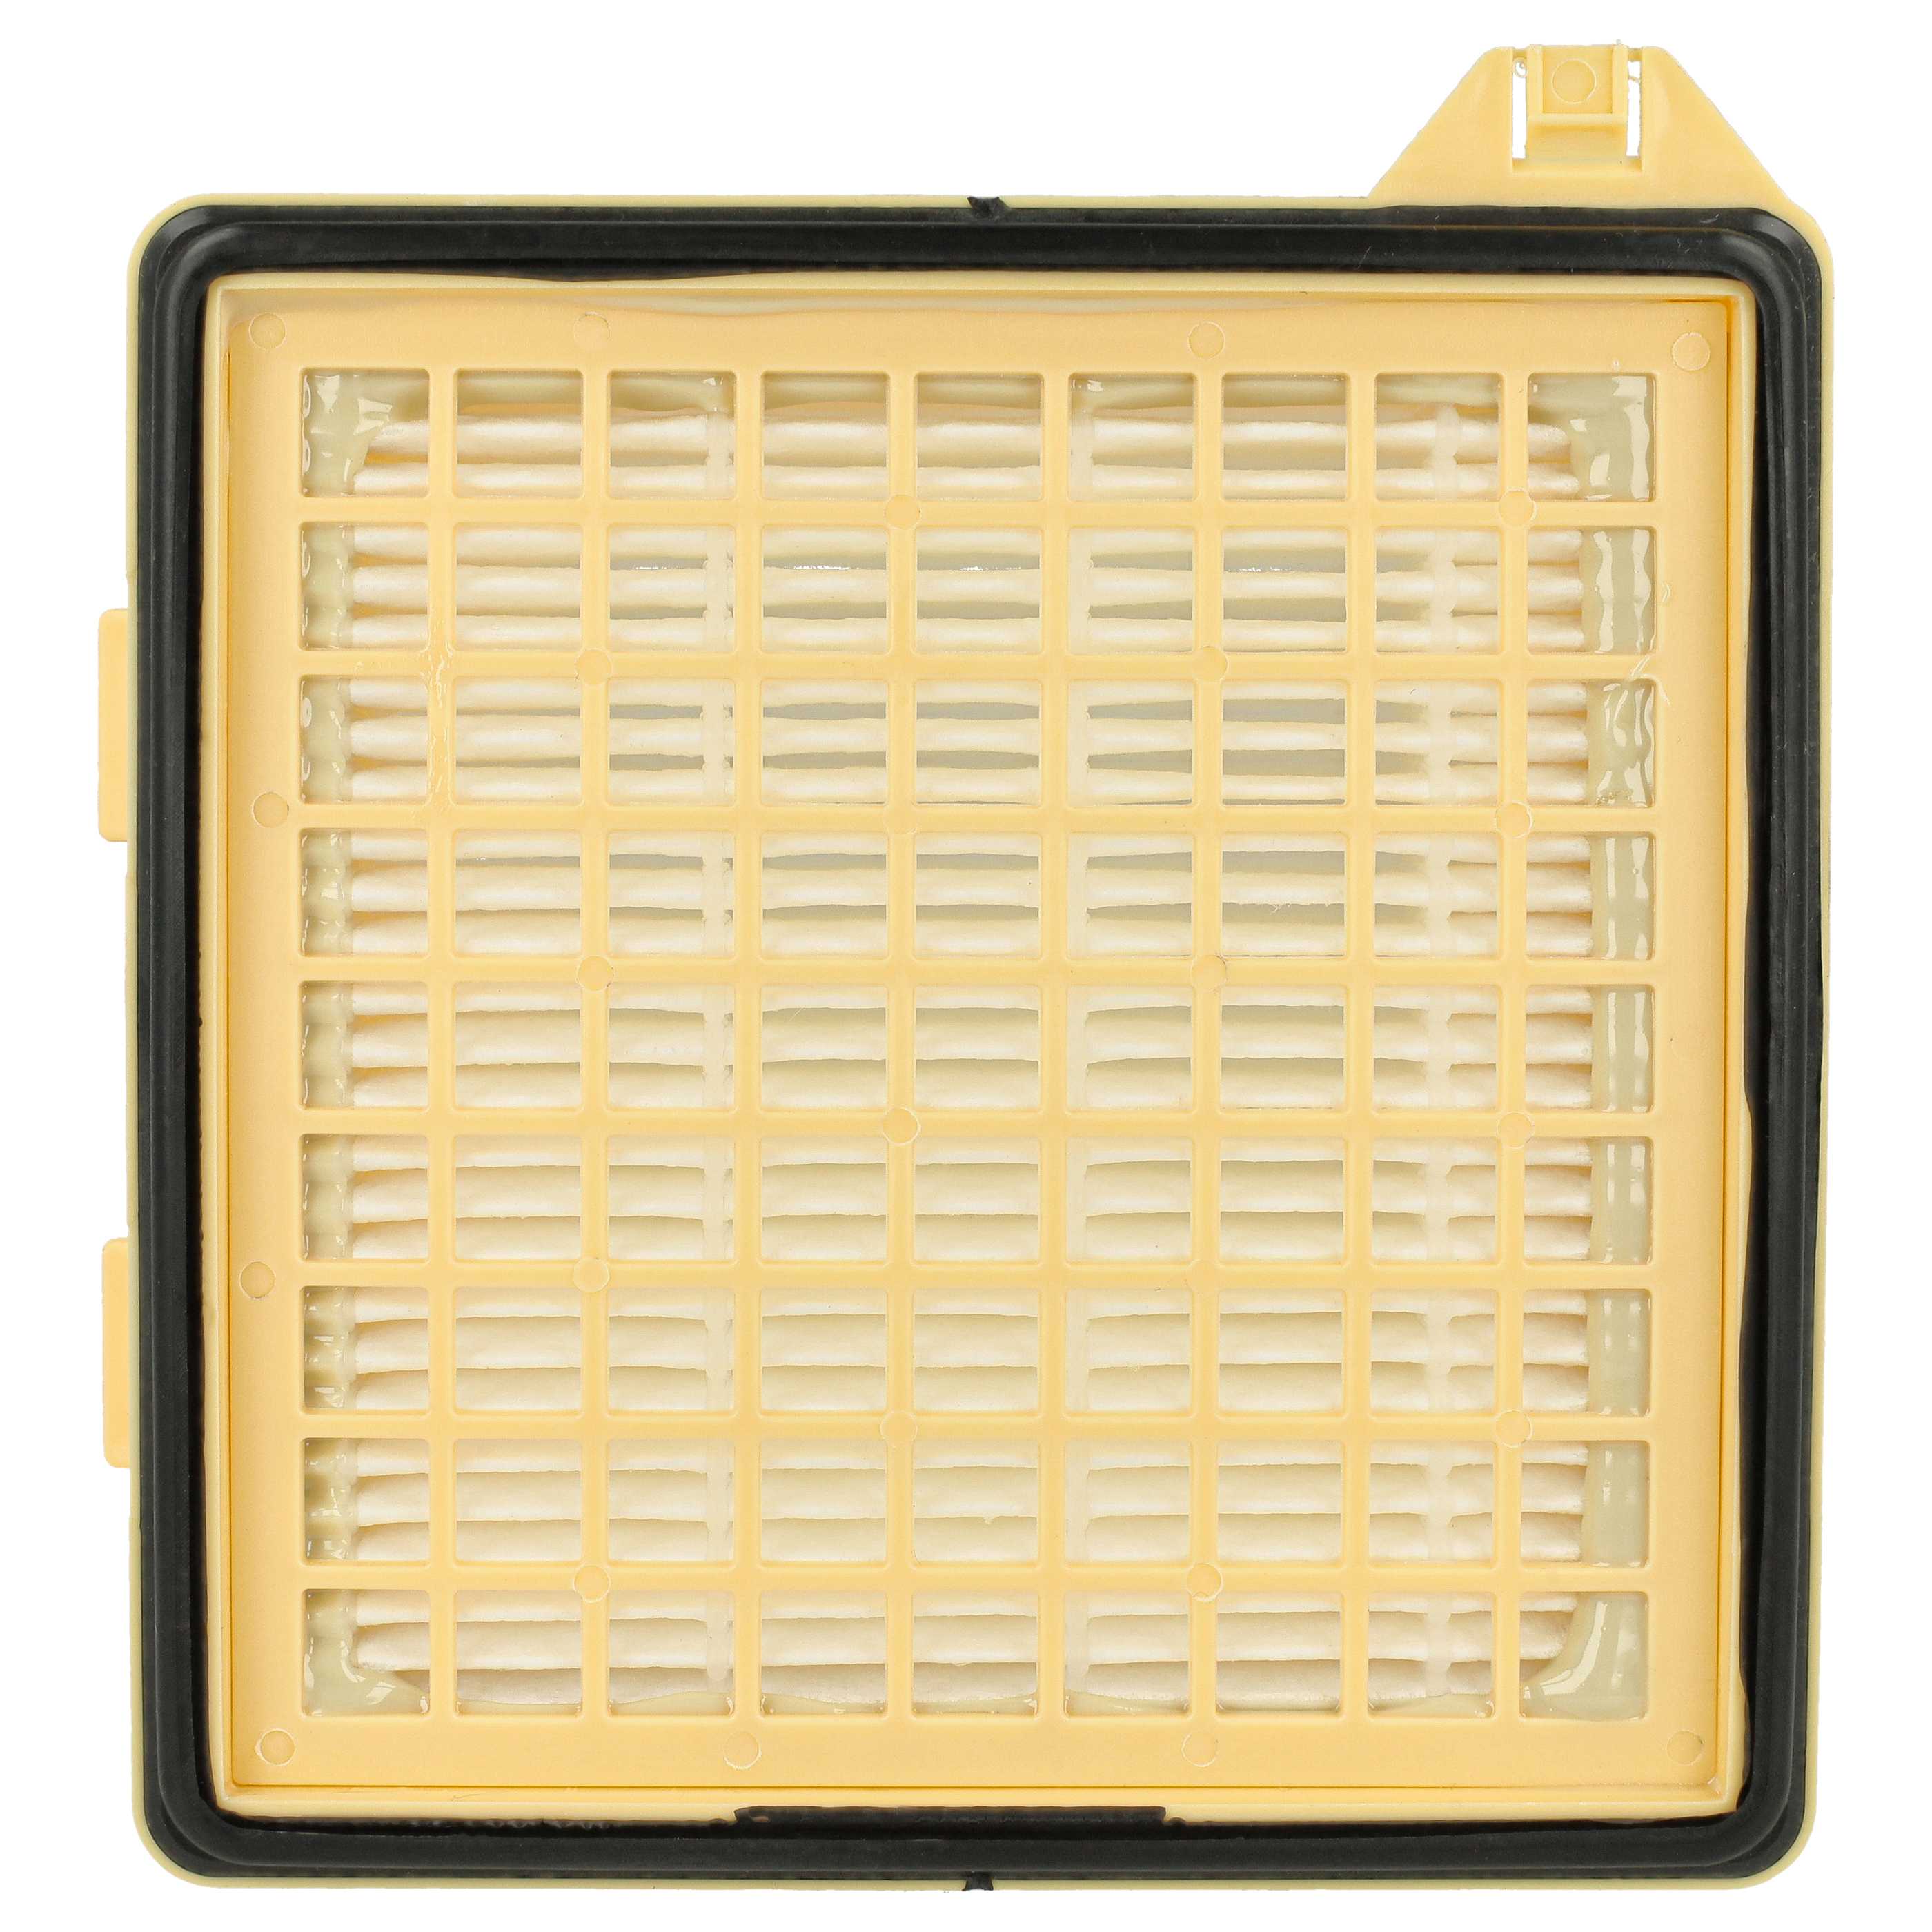 1x HEPA filter replaces Vorwerk VT260 for Vorwerk Vacuum Cleaner